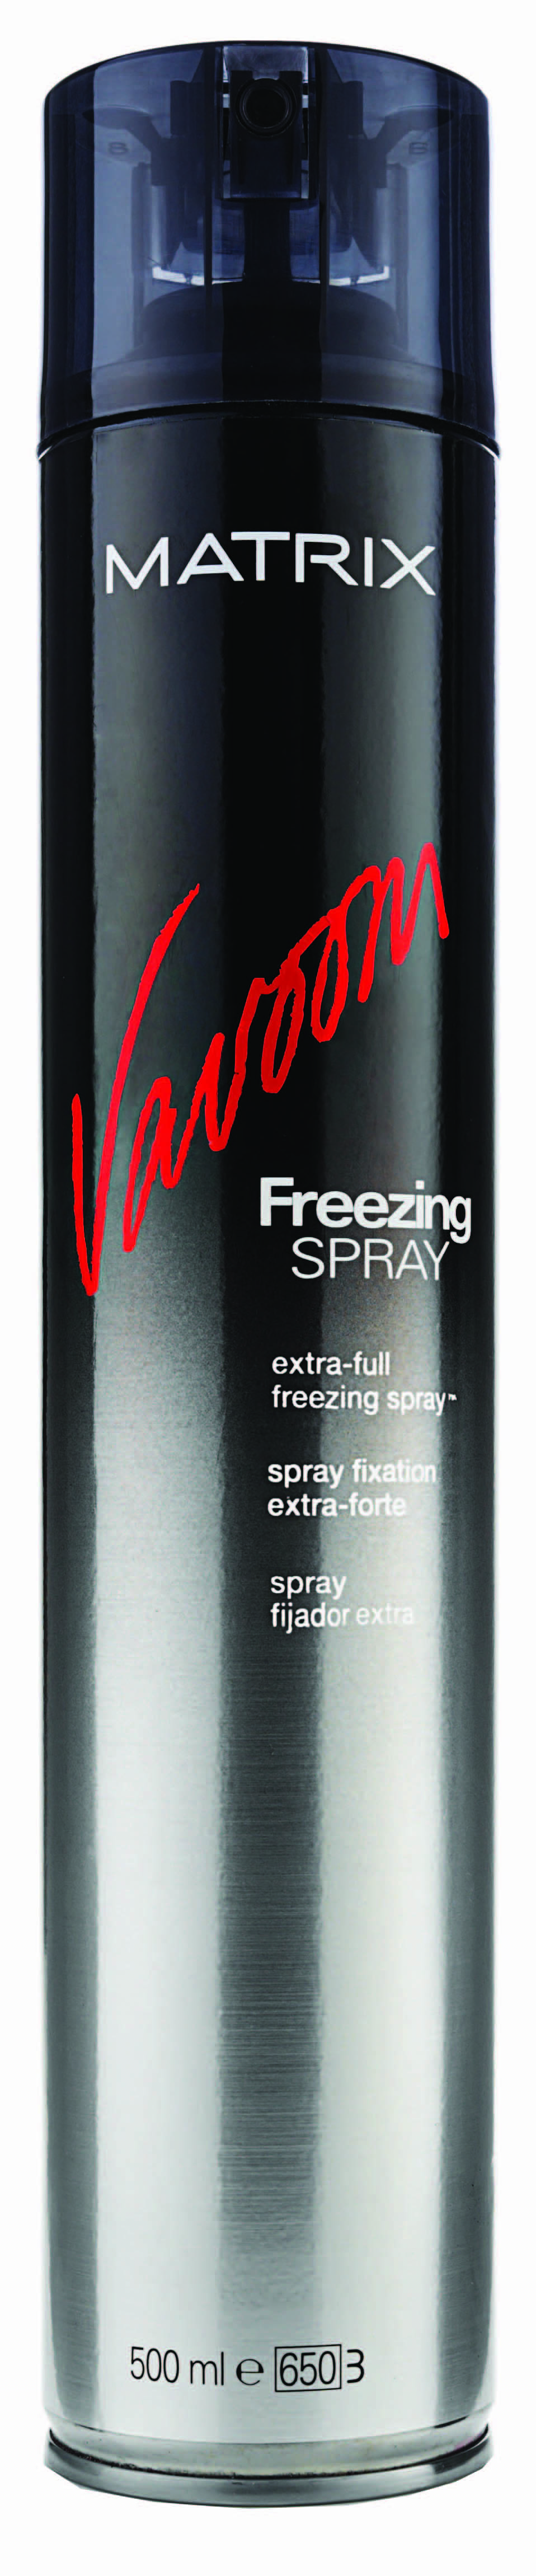 Vavoom Freezing Spray , extra Full, 500 ml